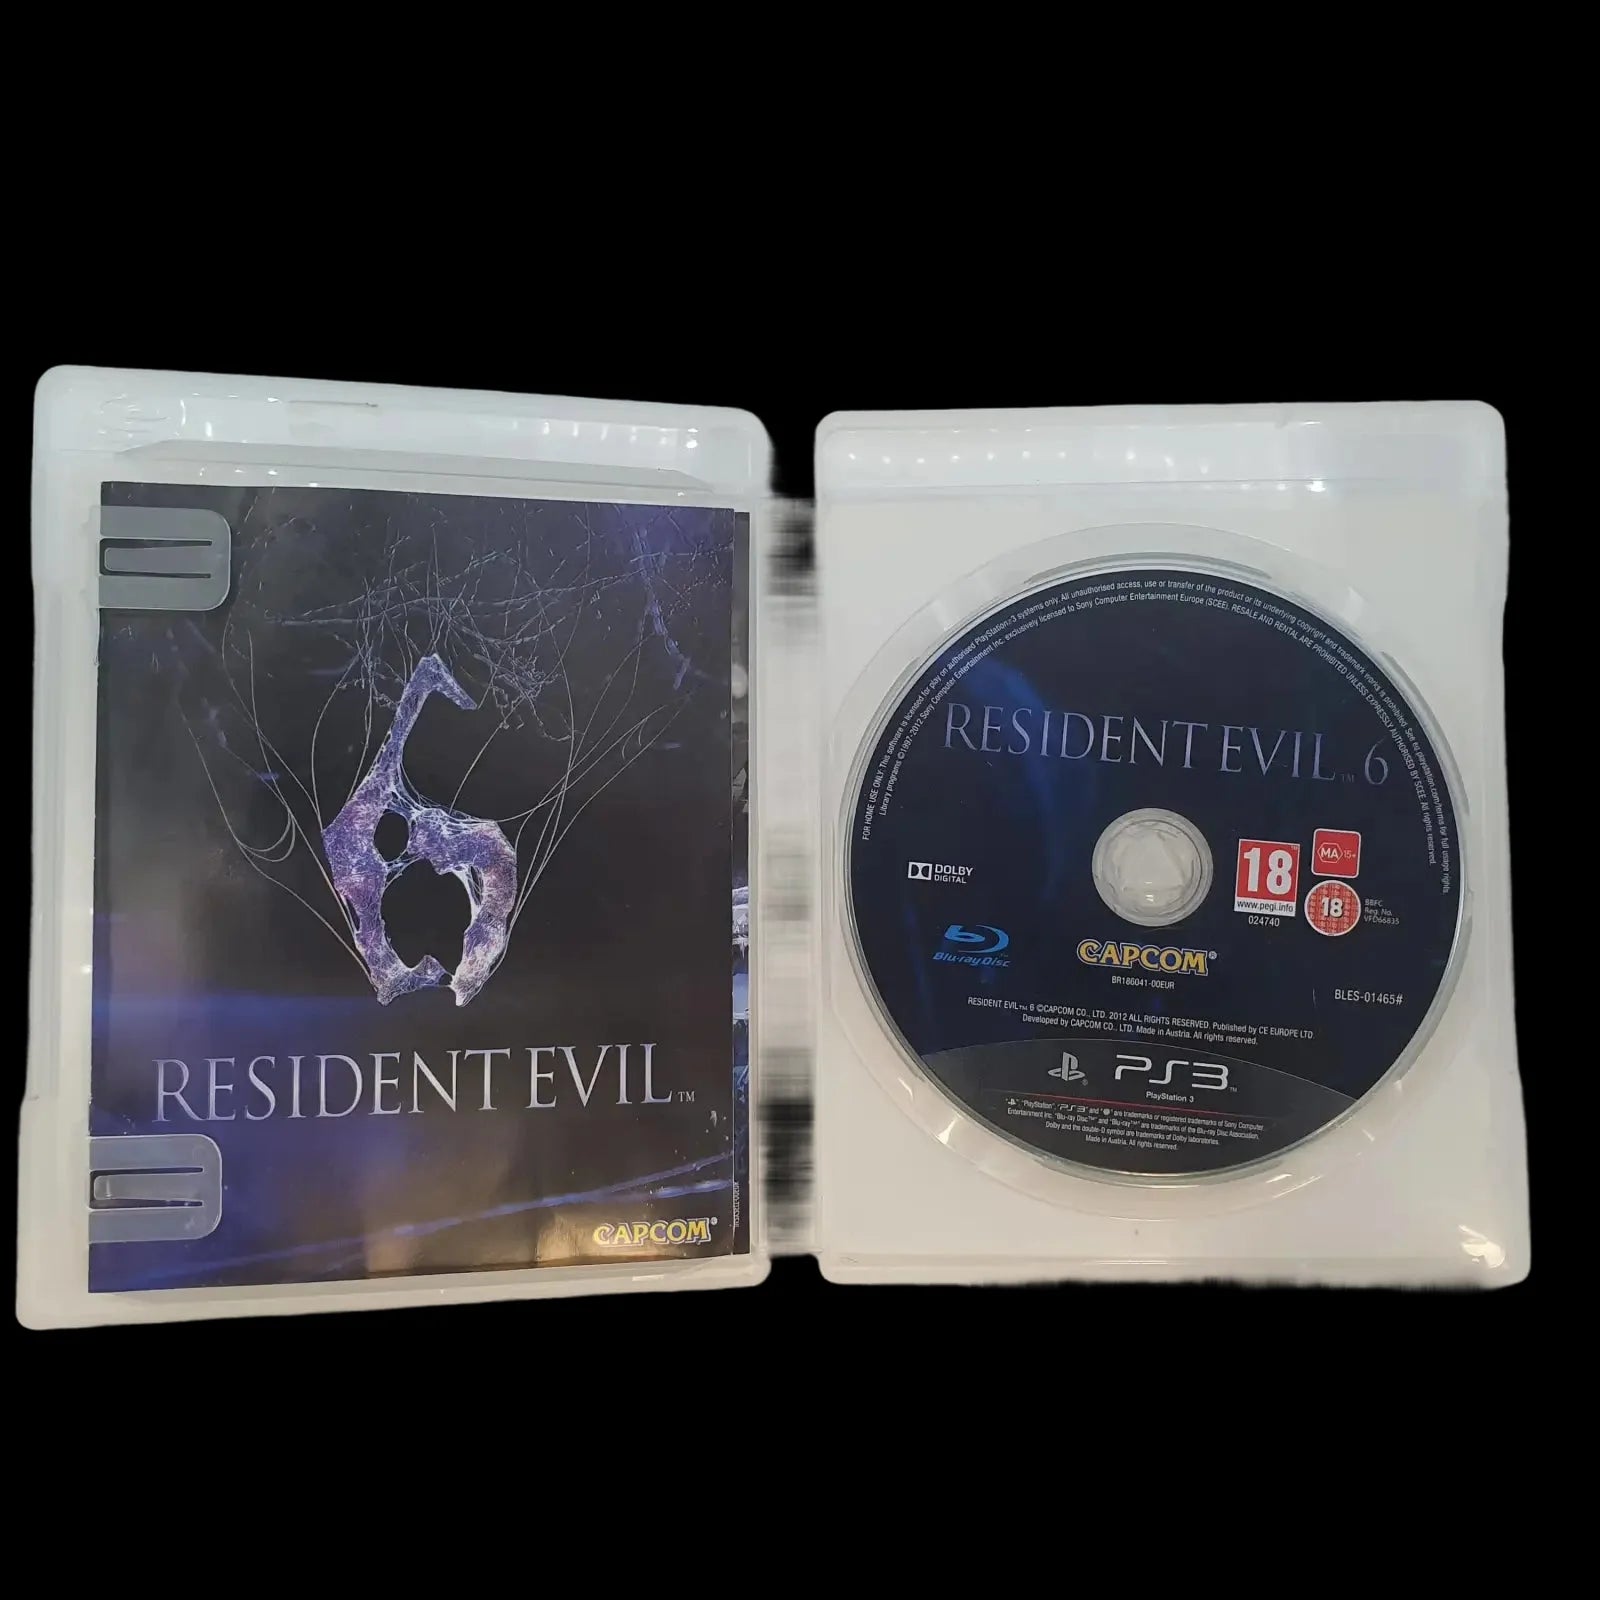 Resident Evil 6 Sony Playstation 3 Capcom 2012 Video Game